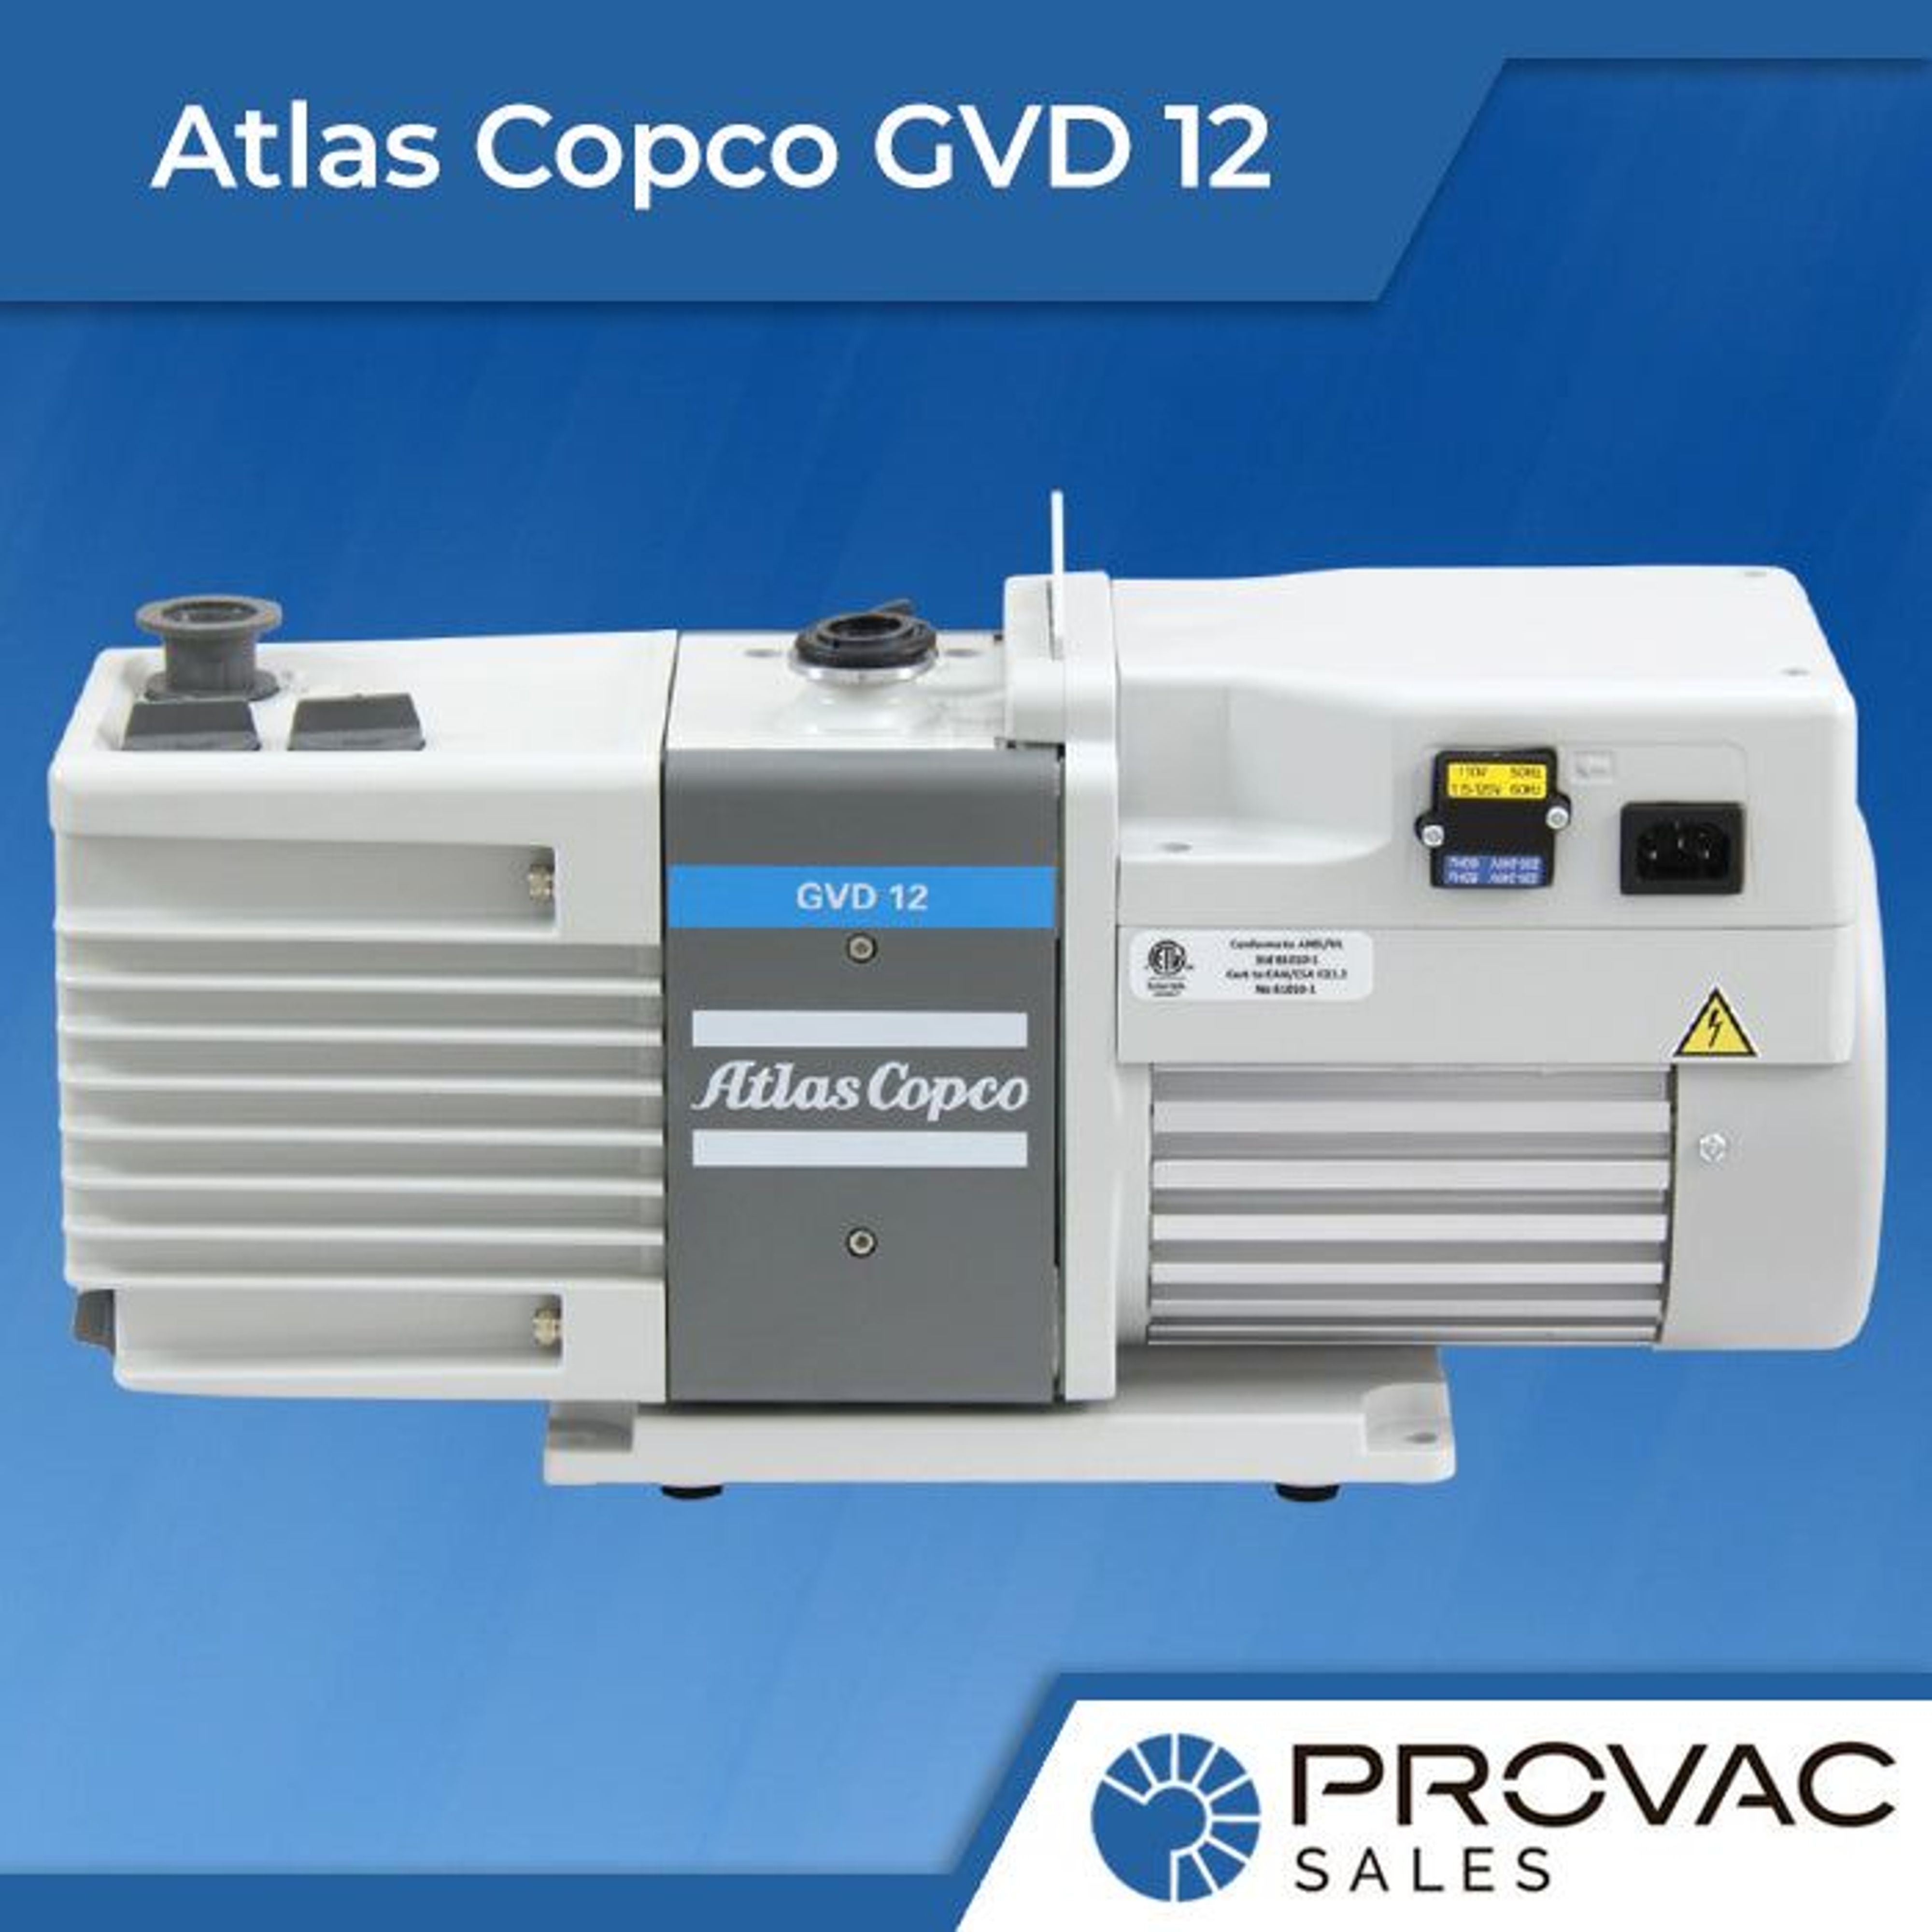 On Sale Now: Atlas Copco GVD 12 Rotary Vane Pump Background